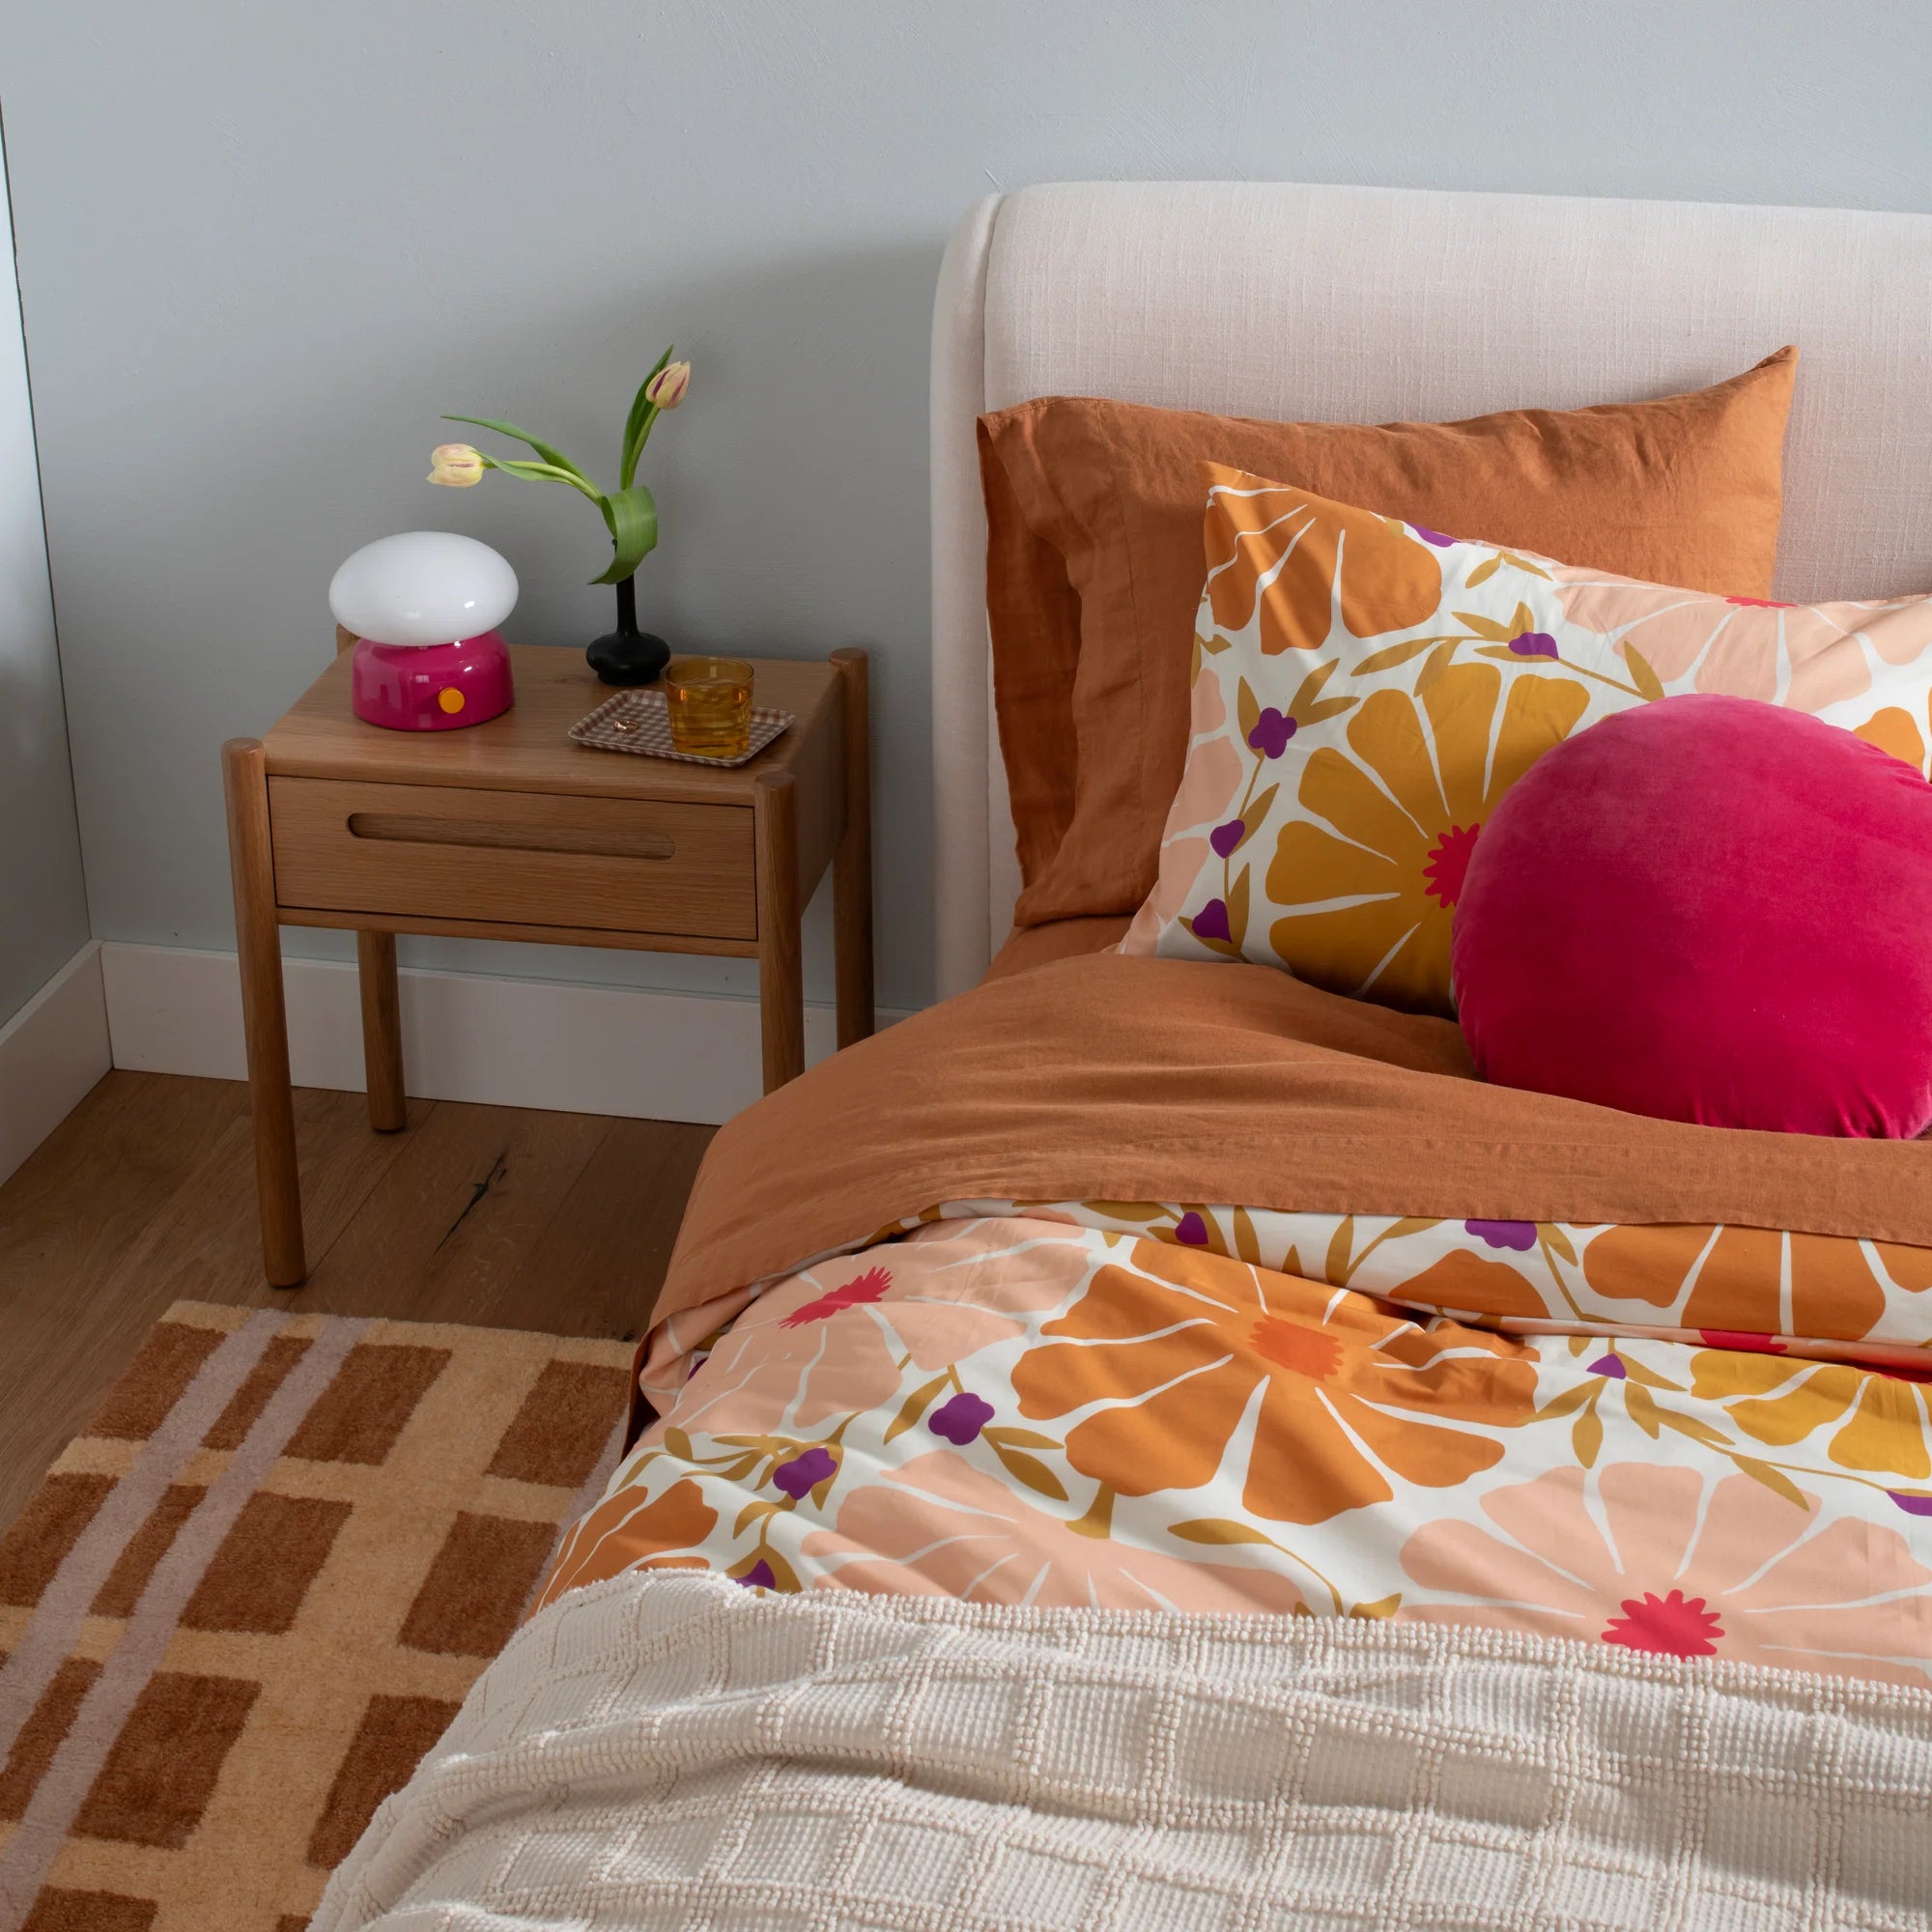 Bright seventies inspired bedding.